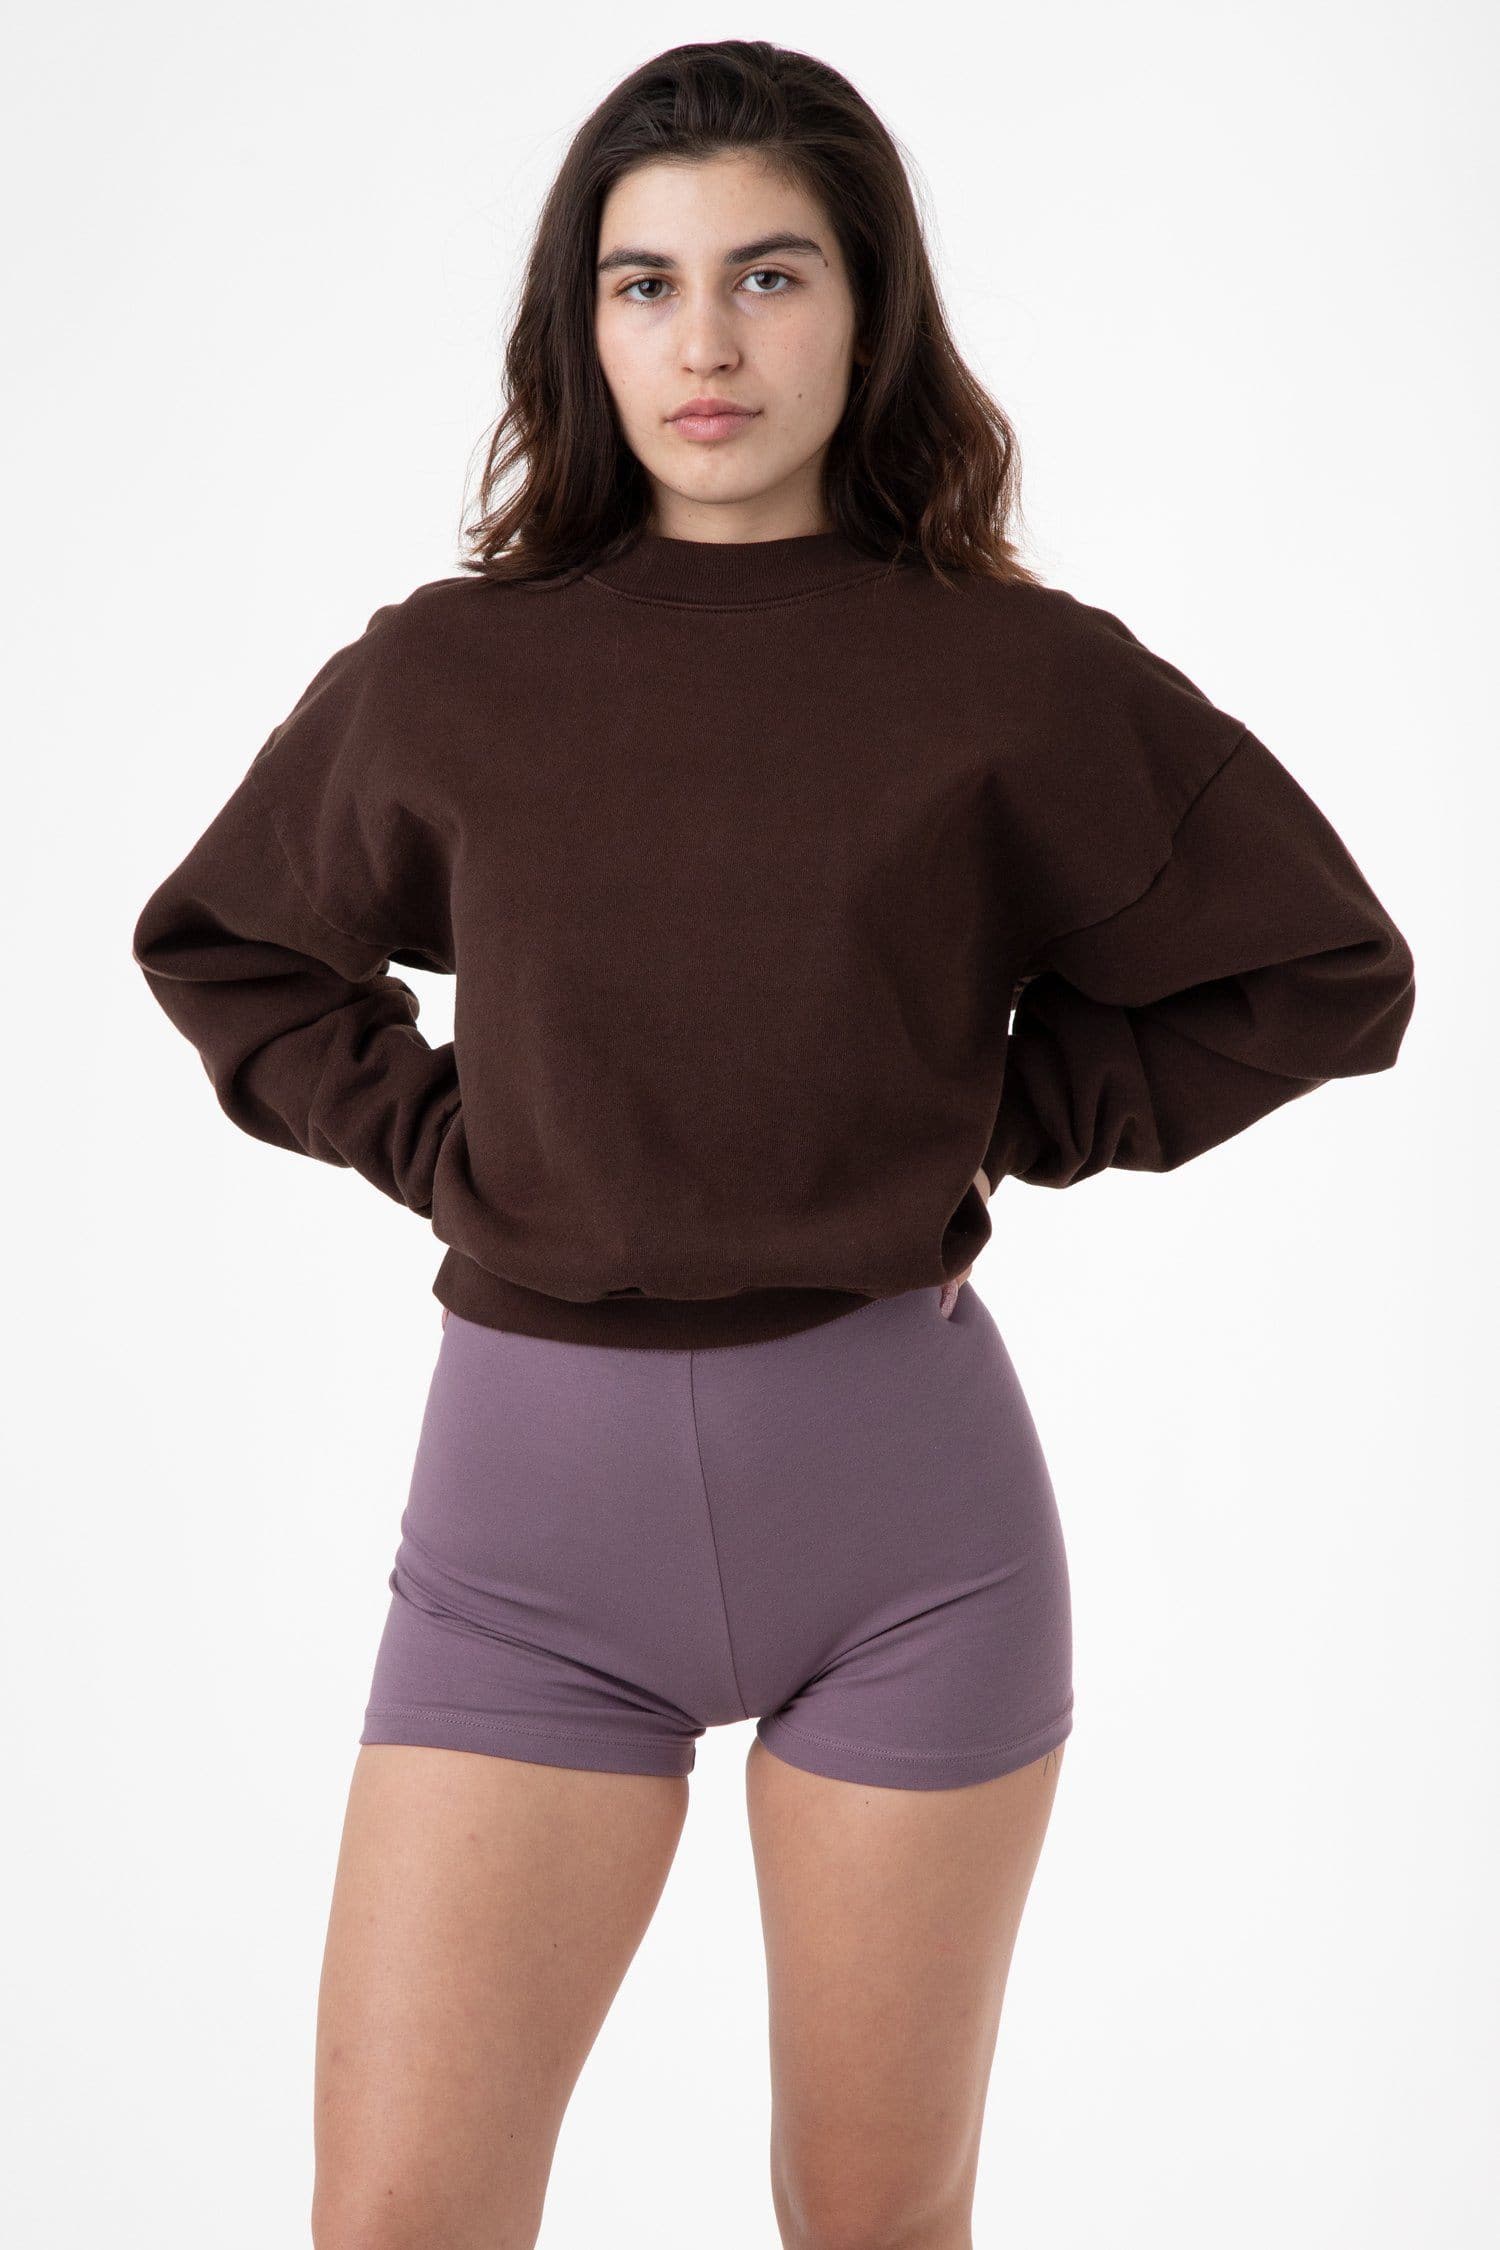 8330 - Cotton Spandex Short Shorts  Spandex shorts, Women short skirt,  Girls in leggings